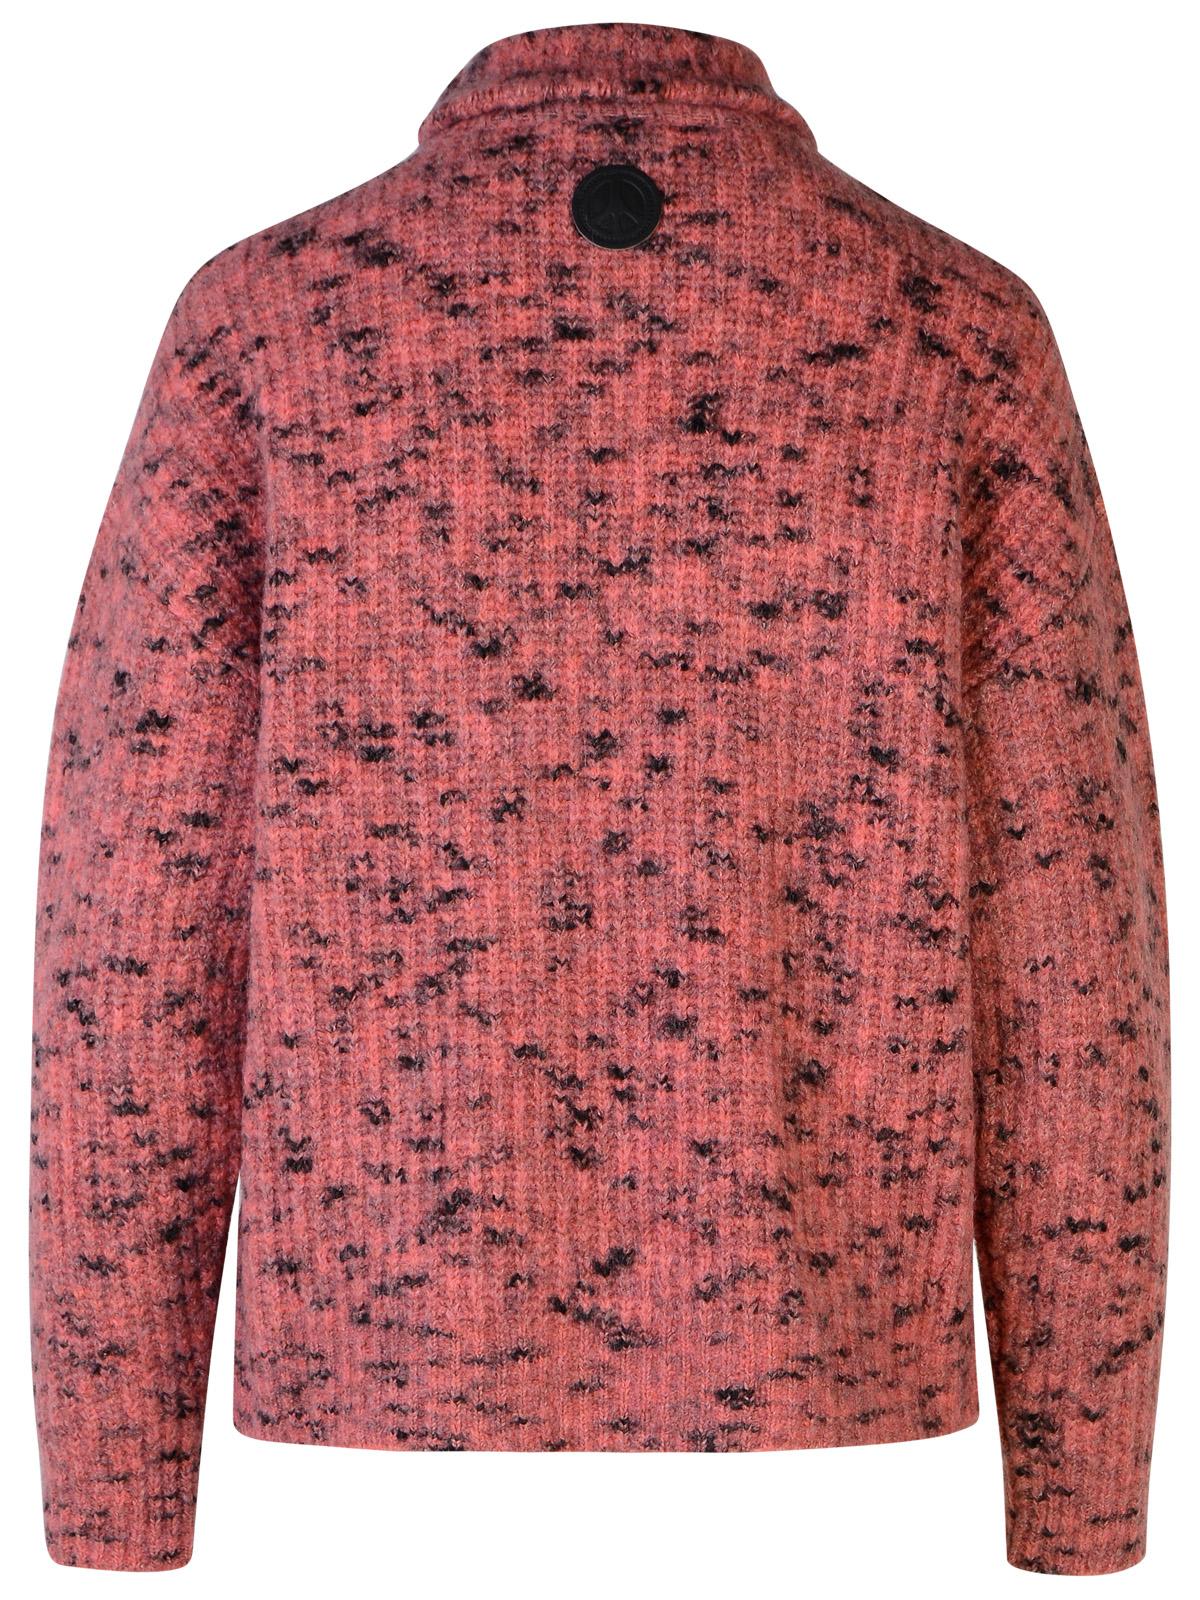 M05ch1n0 Jeans Pink Wool Blend Turtleneck Sweater